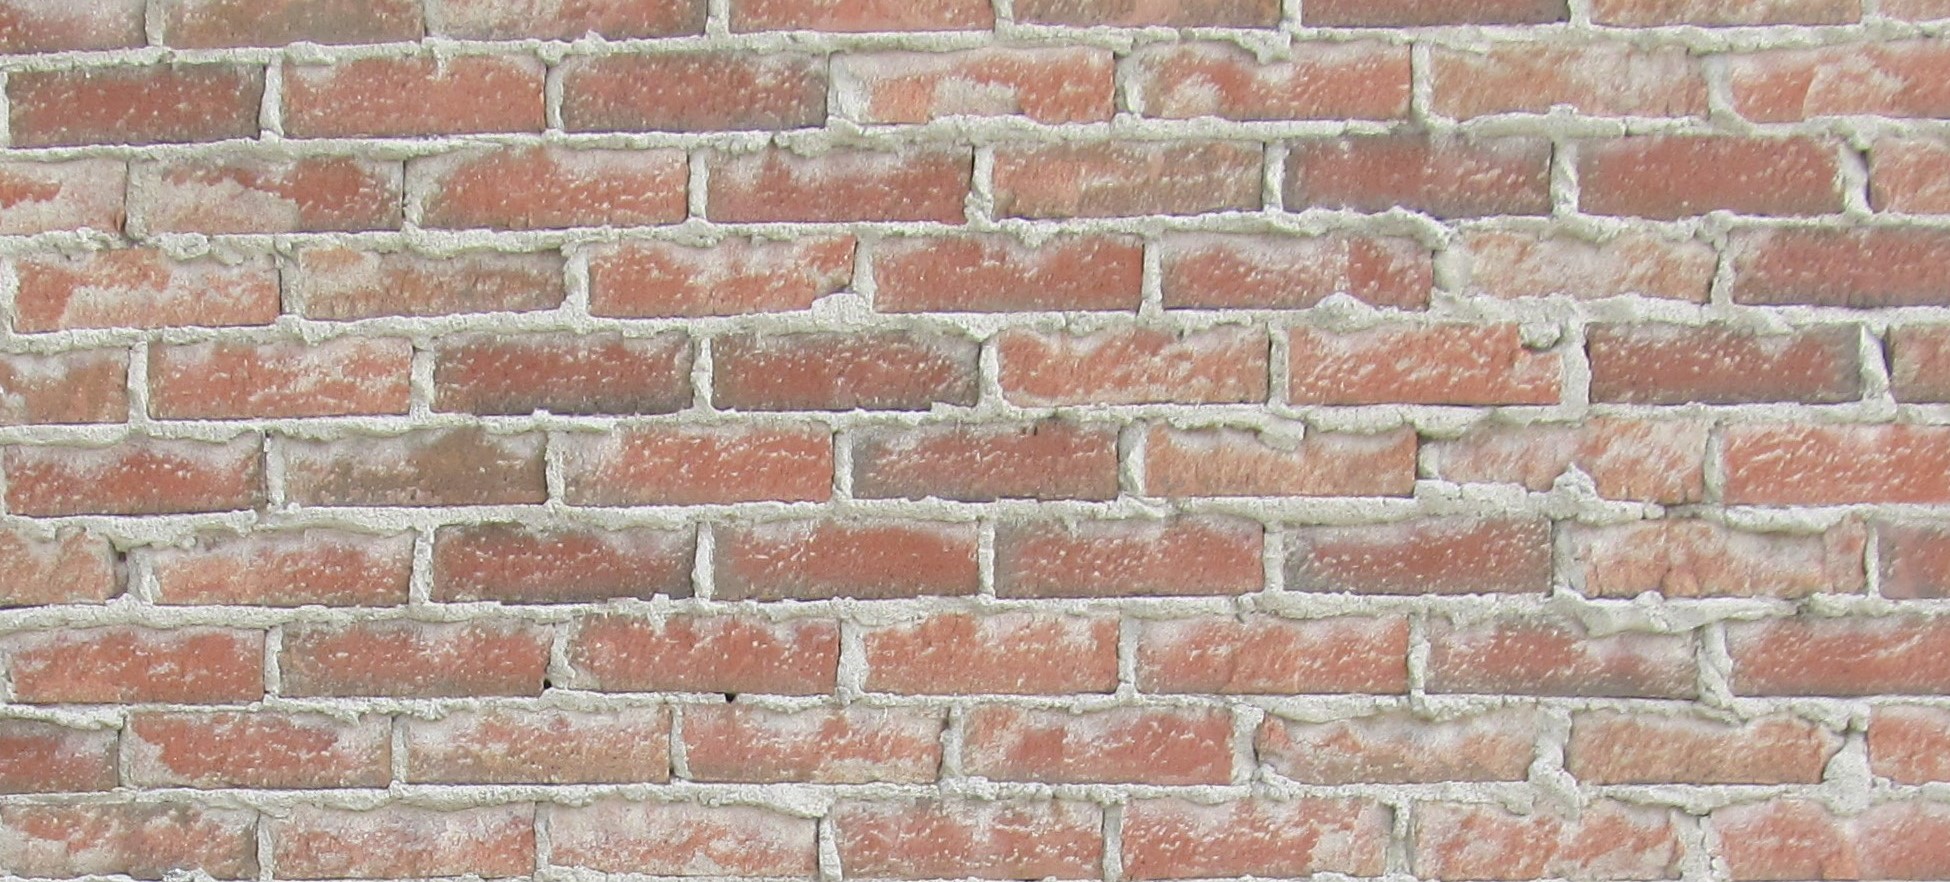 Brick_3.jpg